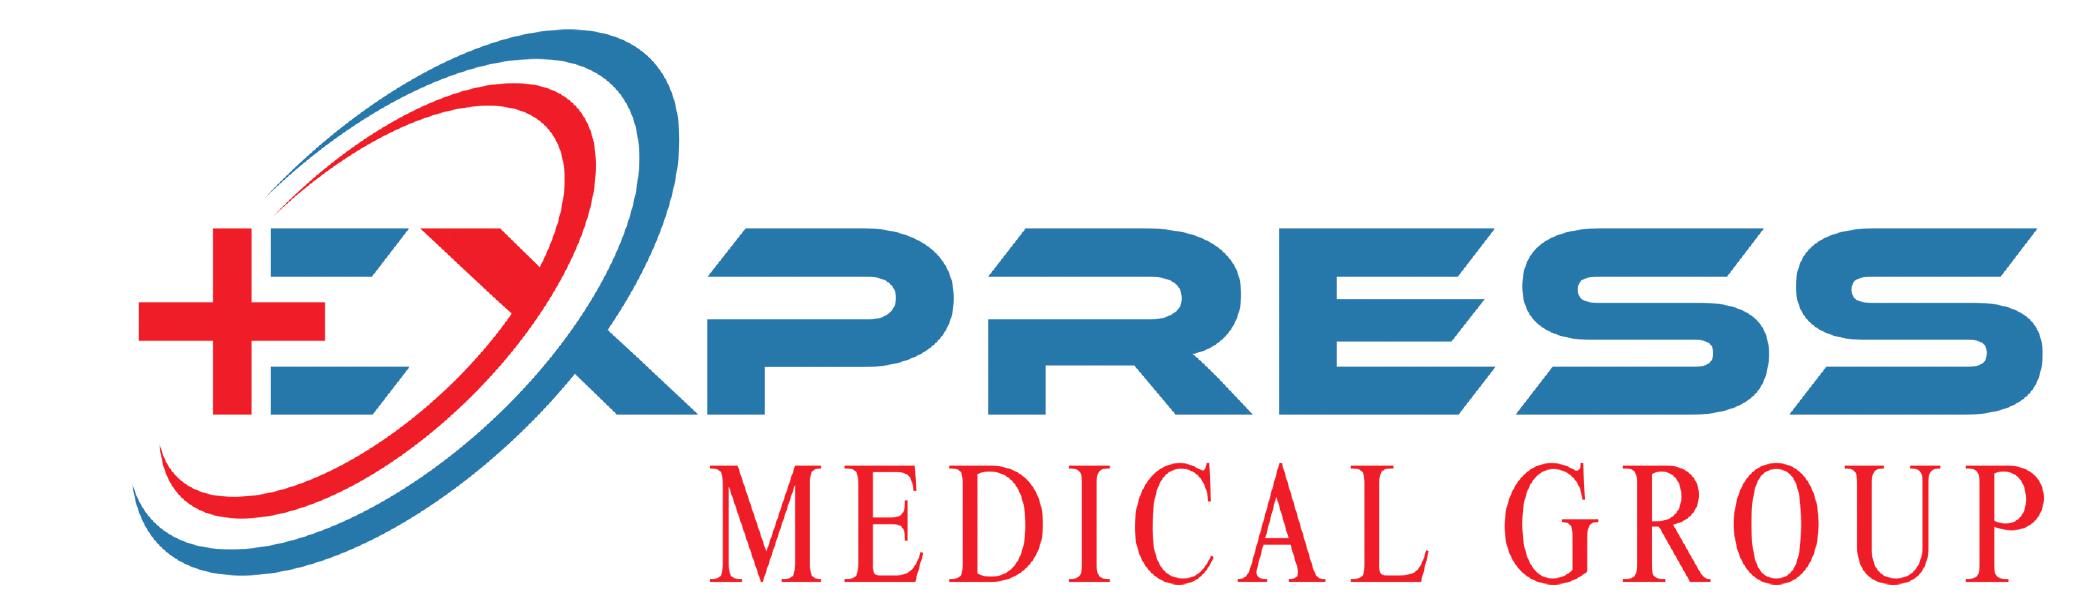 Express medical group logo